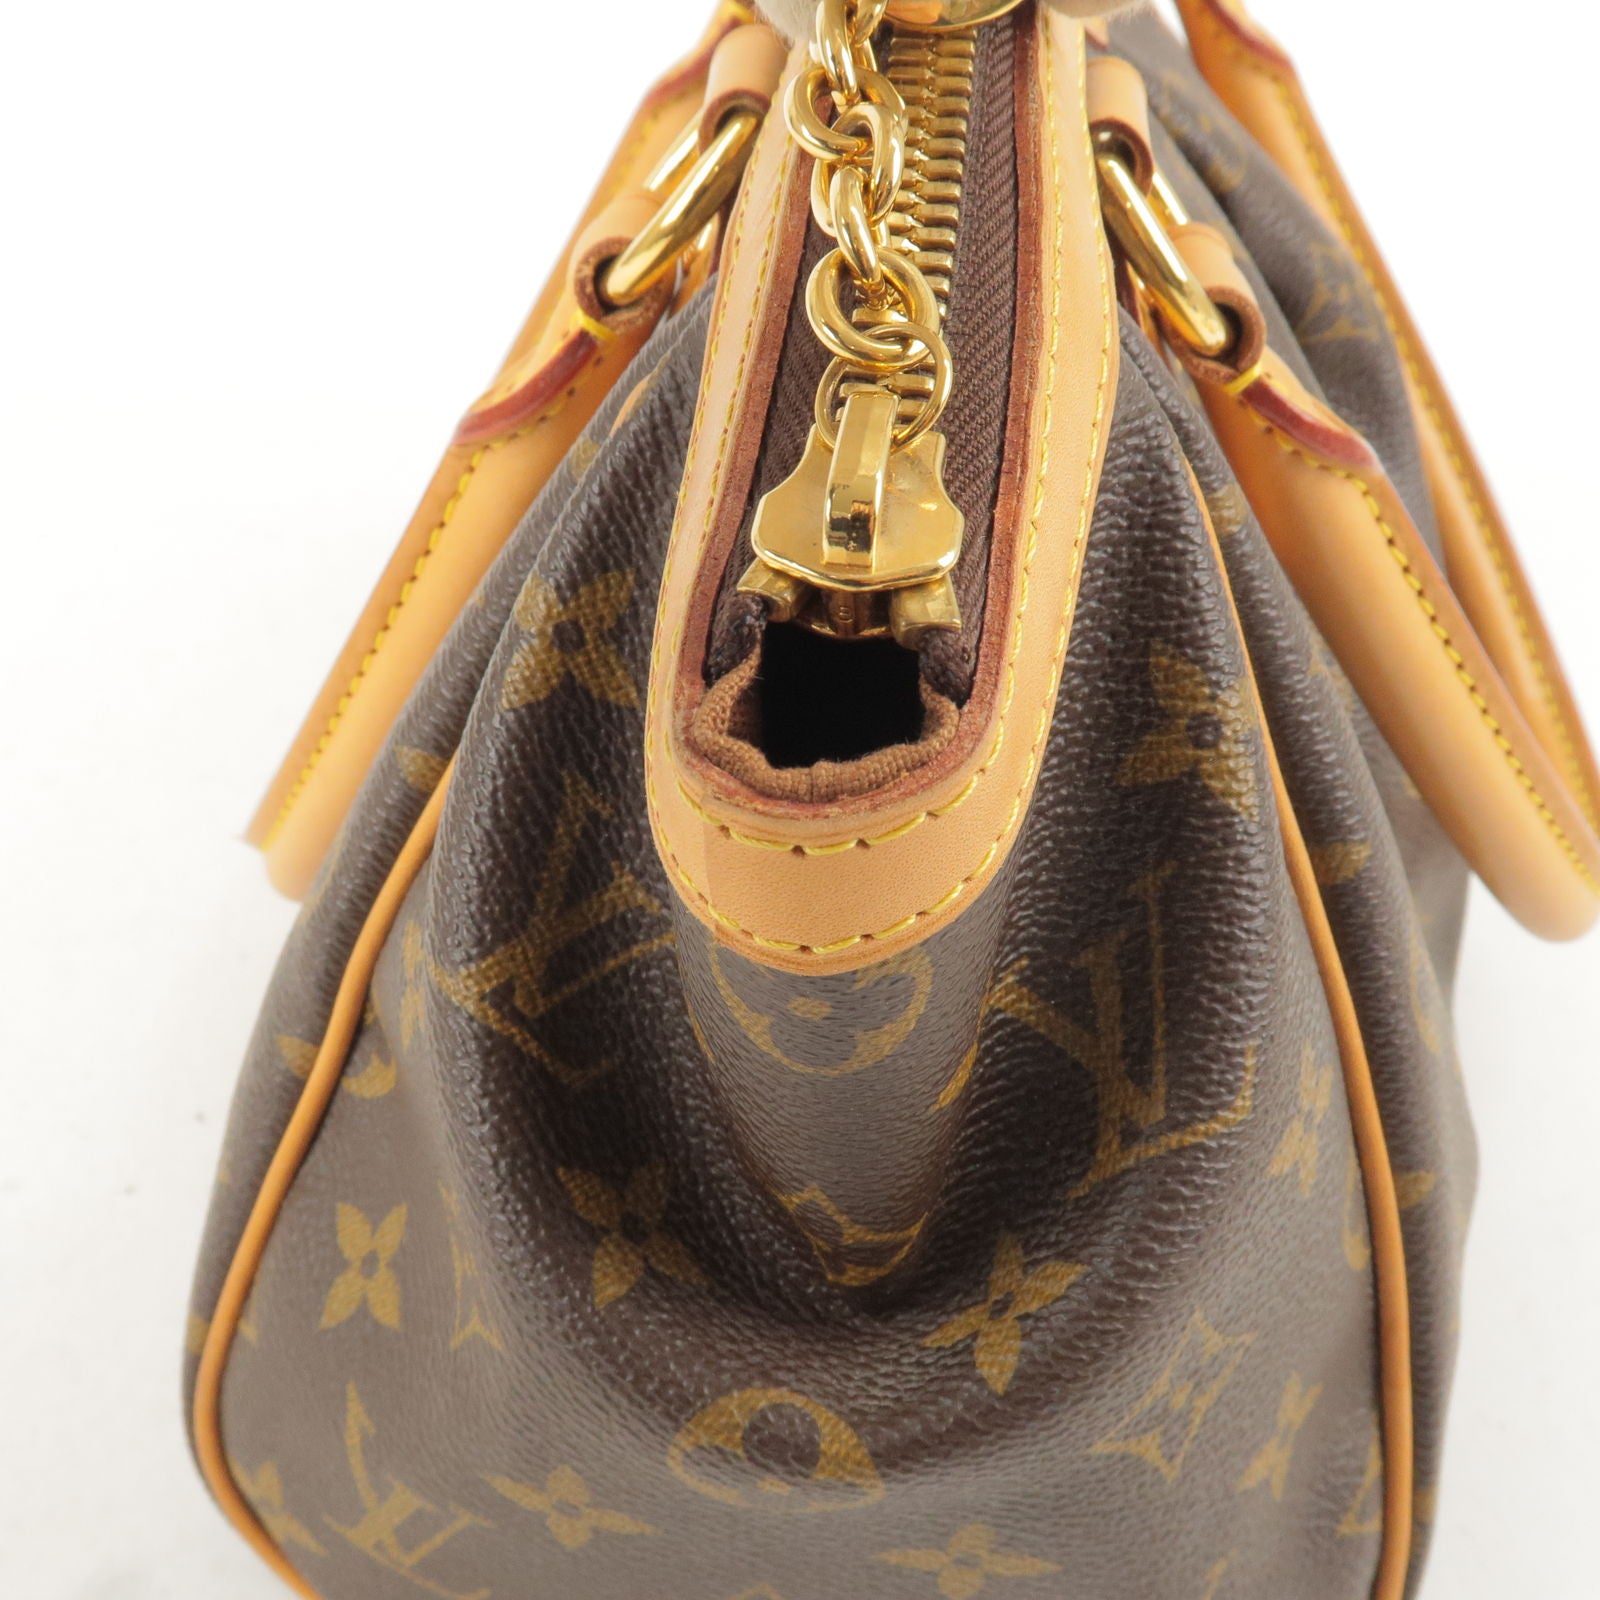 Authentic Louis Vuitton Tivoli PM Monogram M40143 Guarantee Tote Hand Bag  ALA546